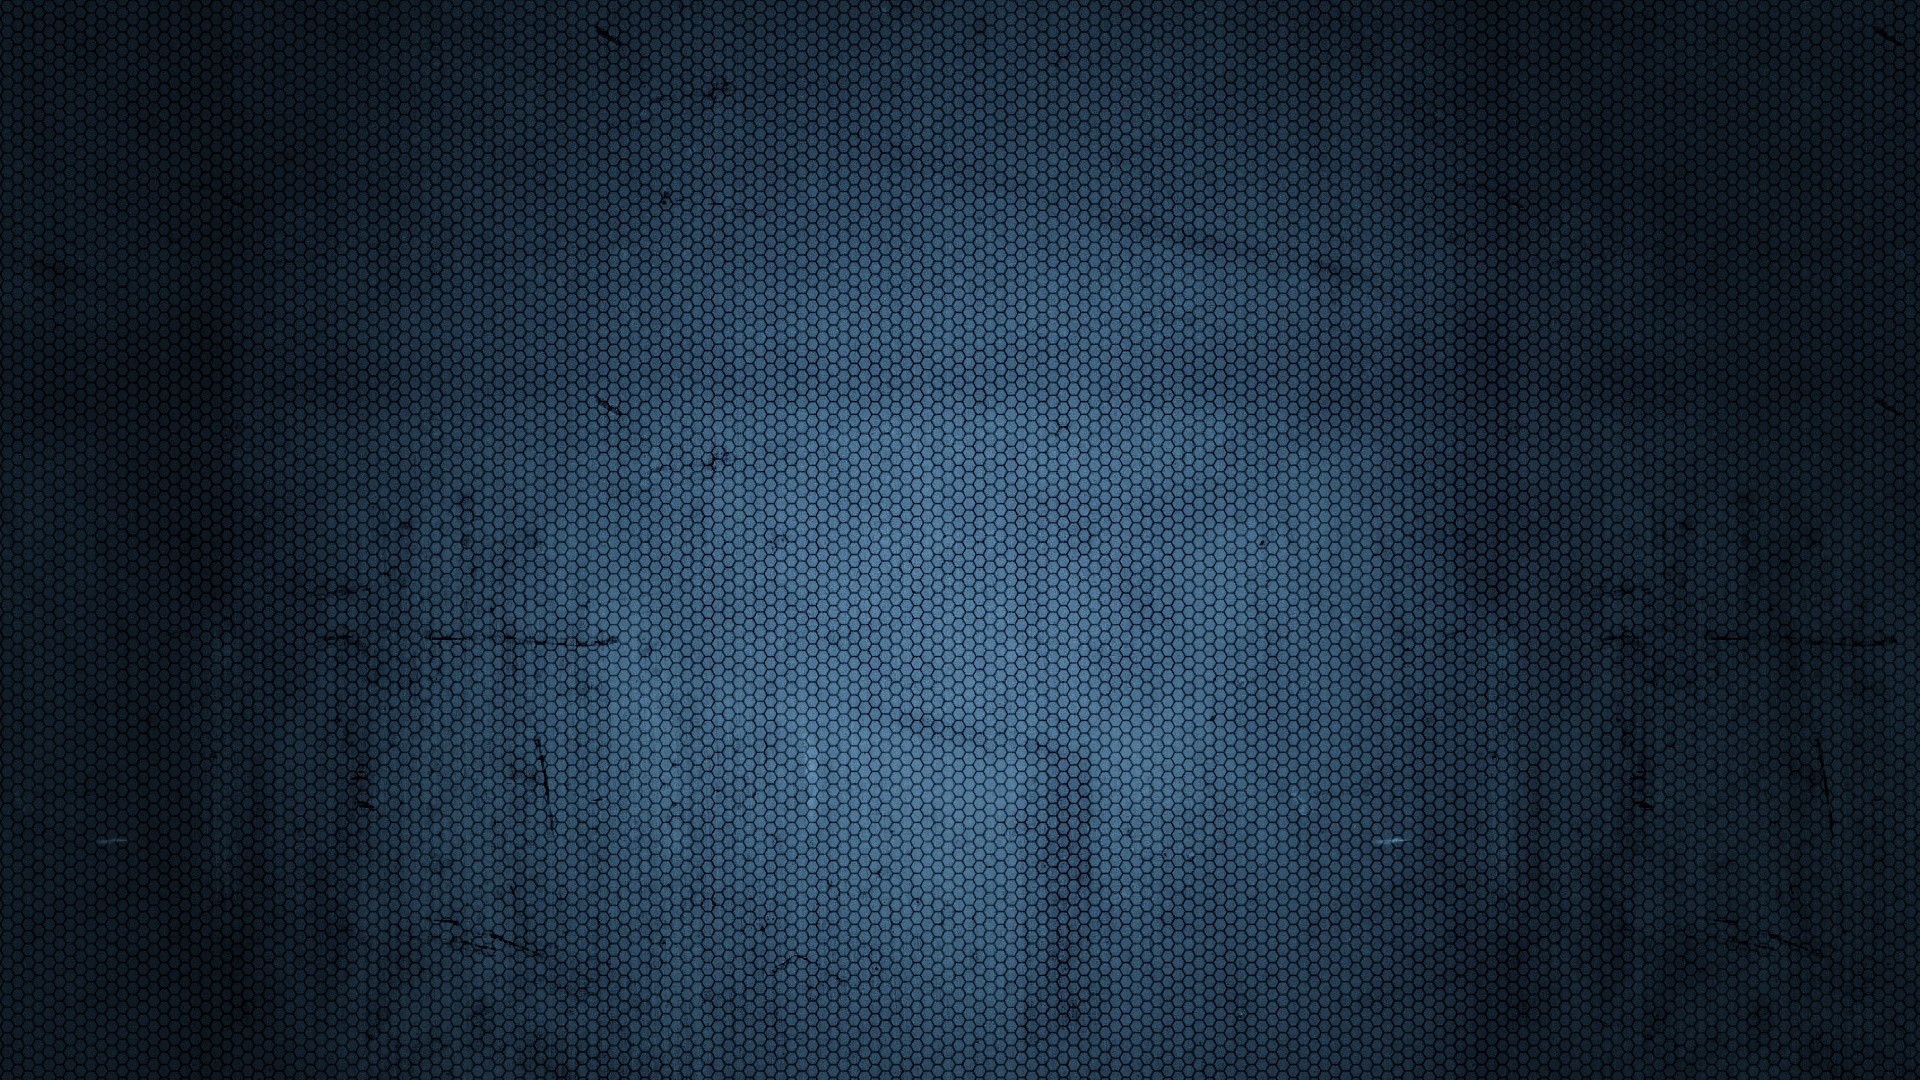 General 1920x1080 texture minimalism blue background